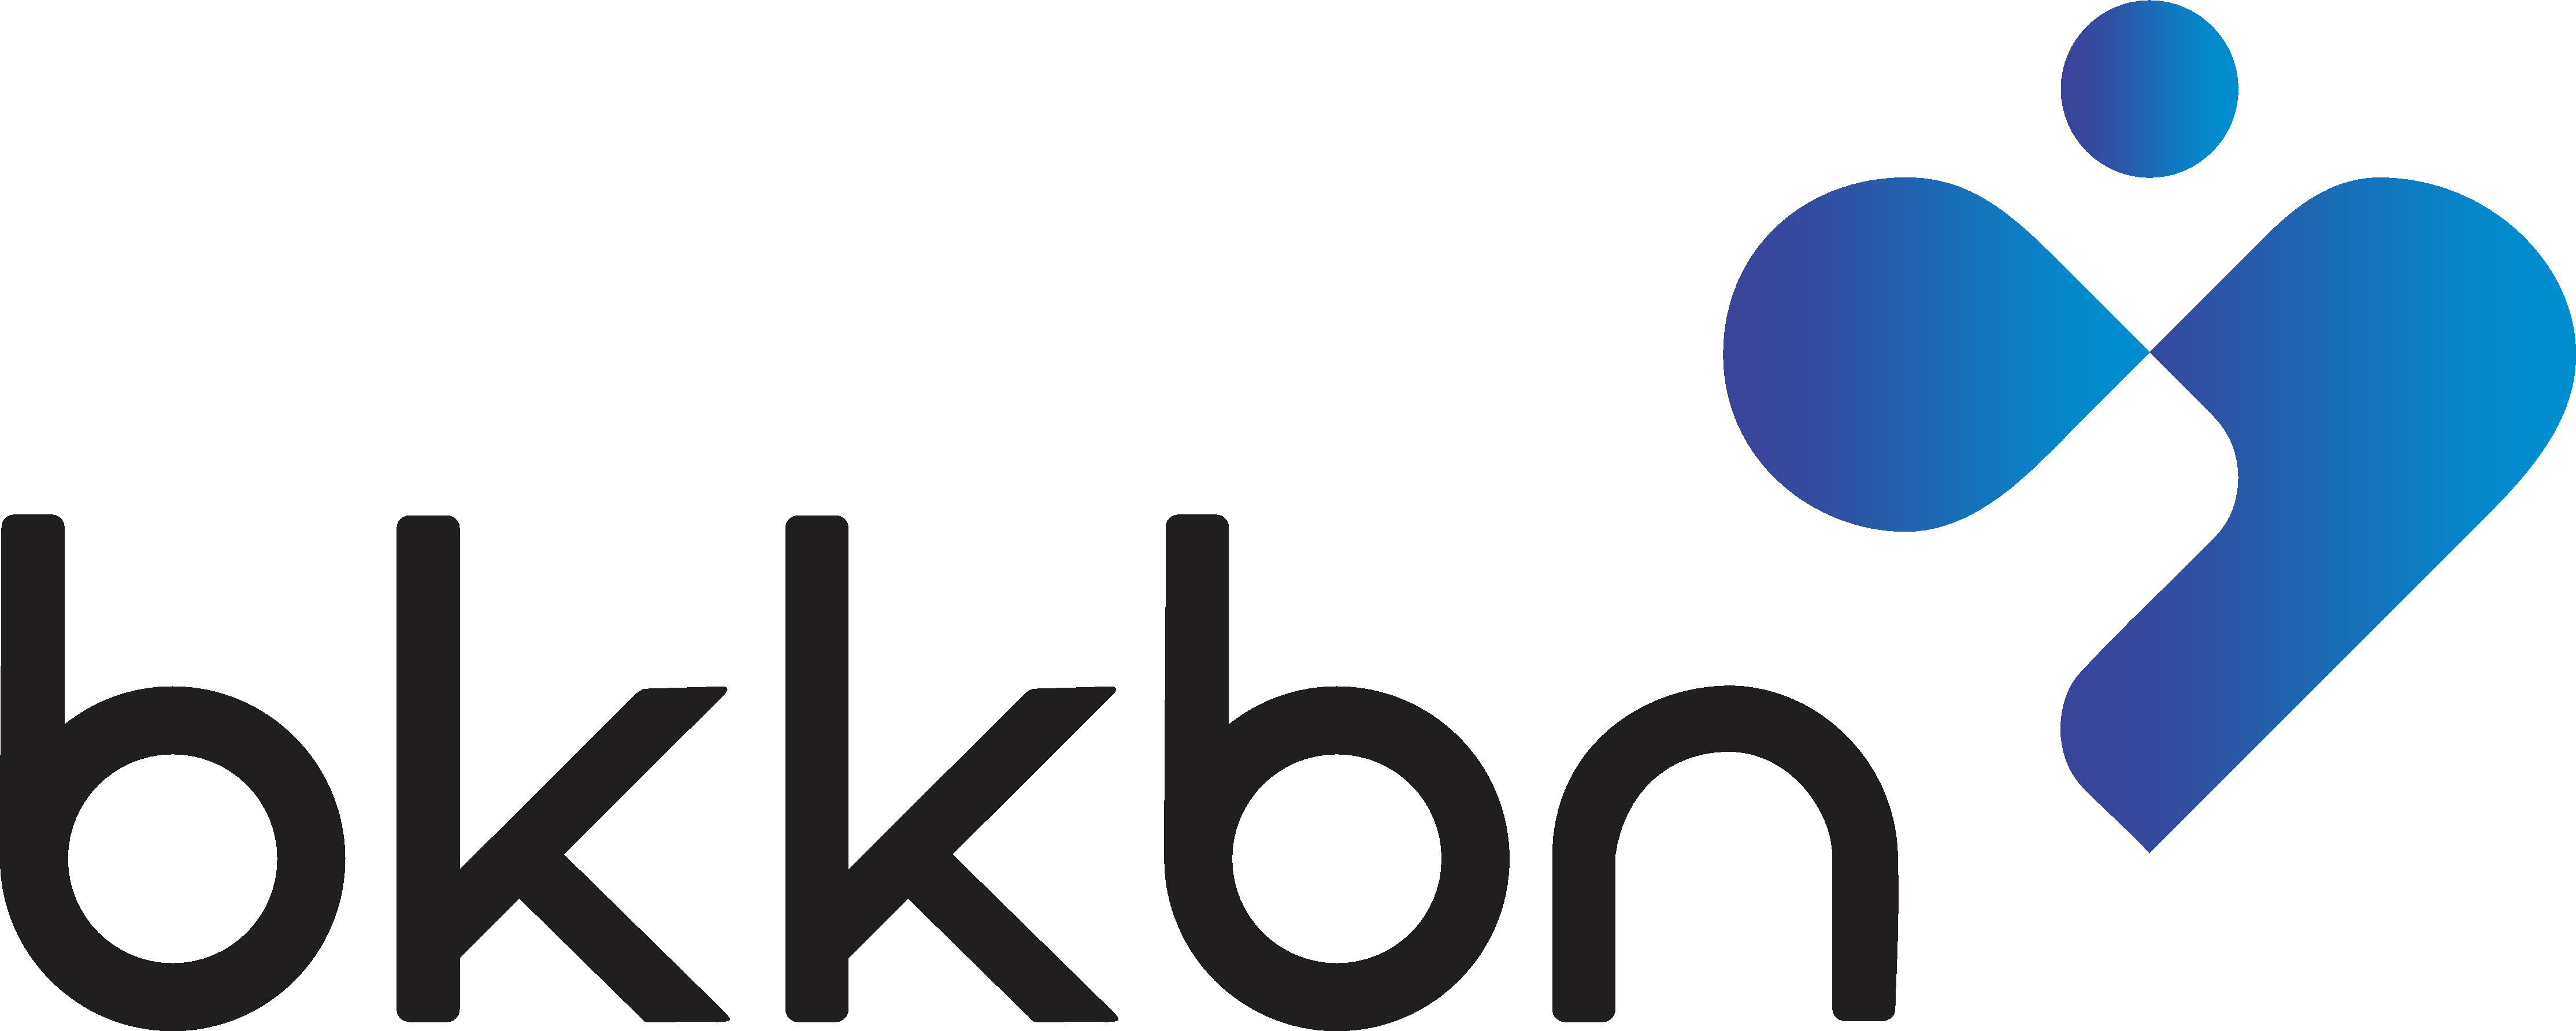 logo bkkbn baru